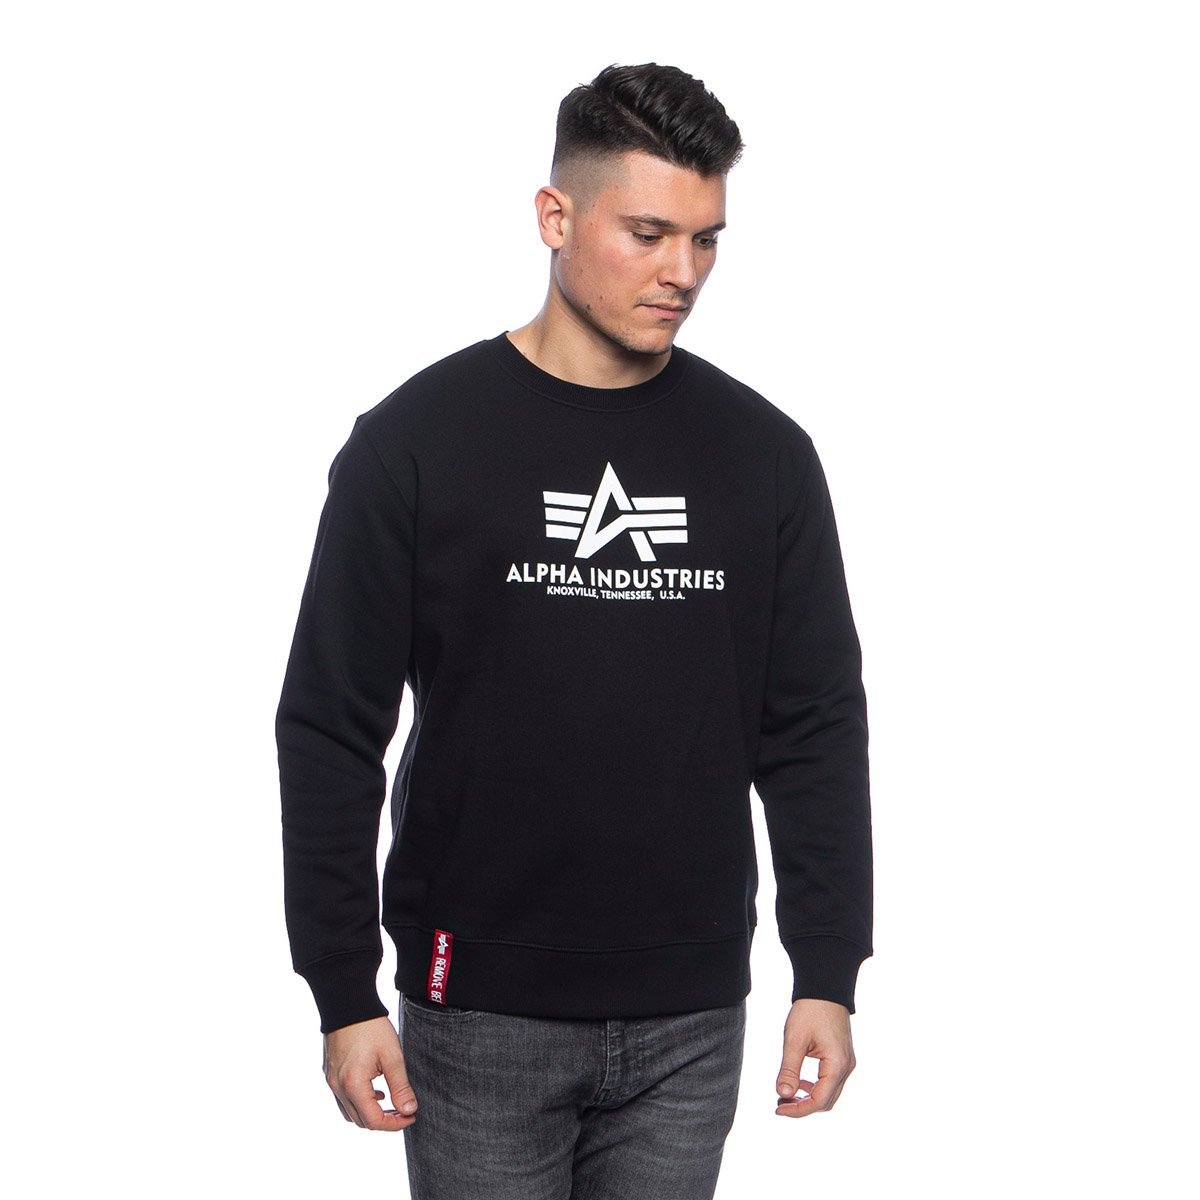 Alpha Industries Sweater Sweatshirt Basic black